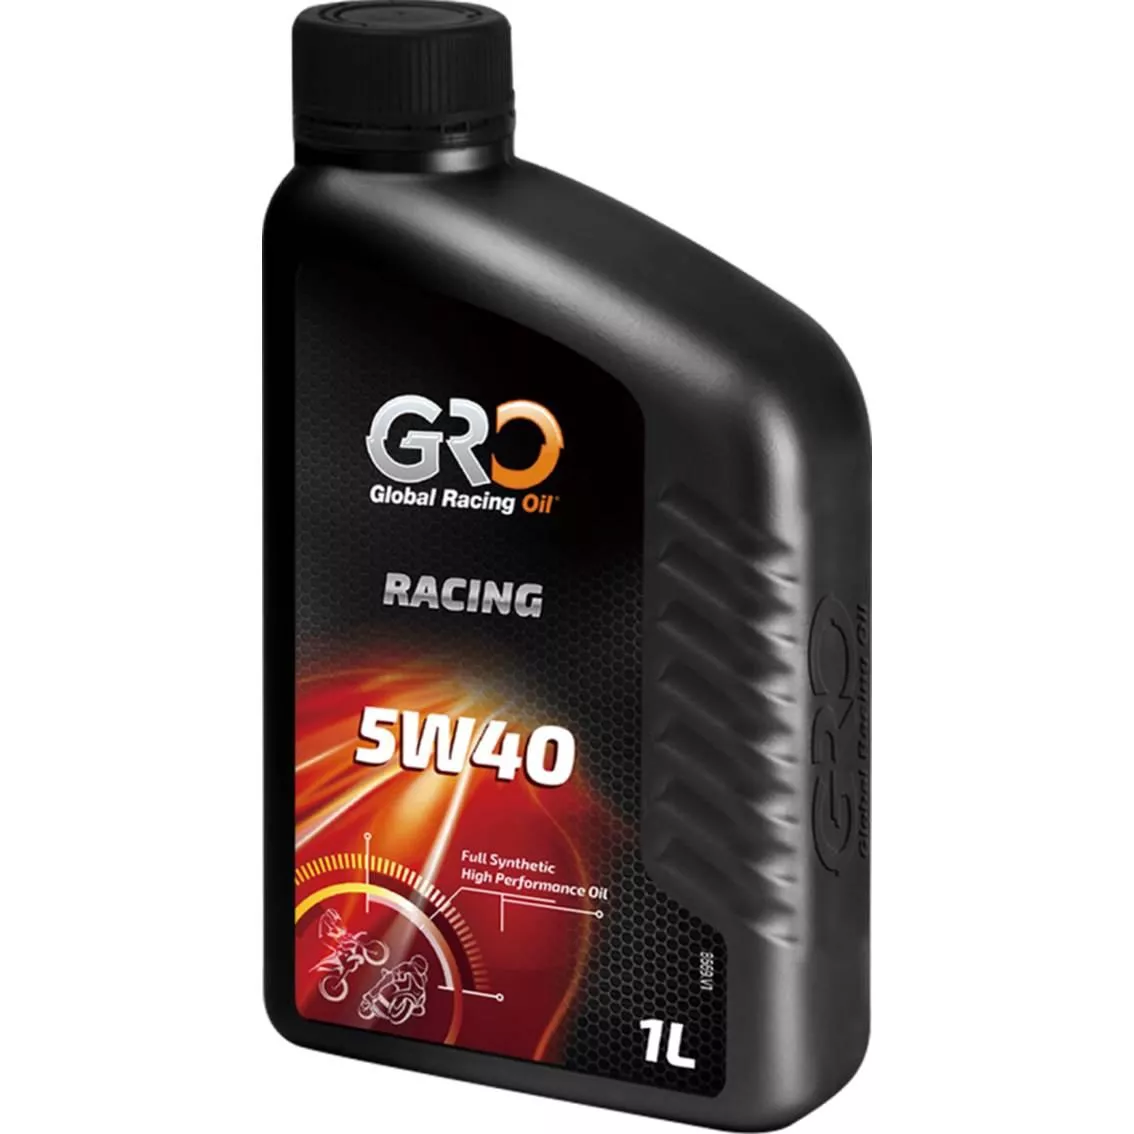 GRO RACING 4T 5W40 全合成競技機車機油